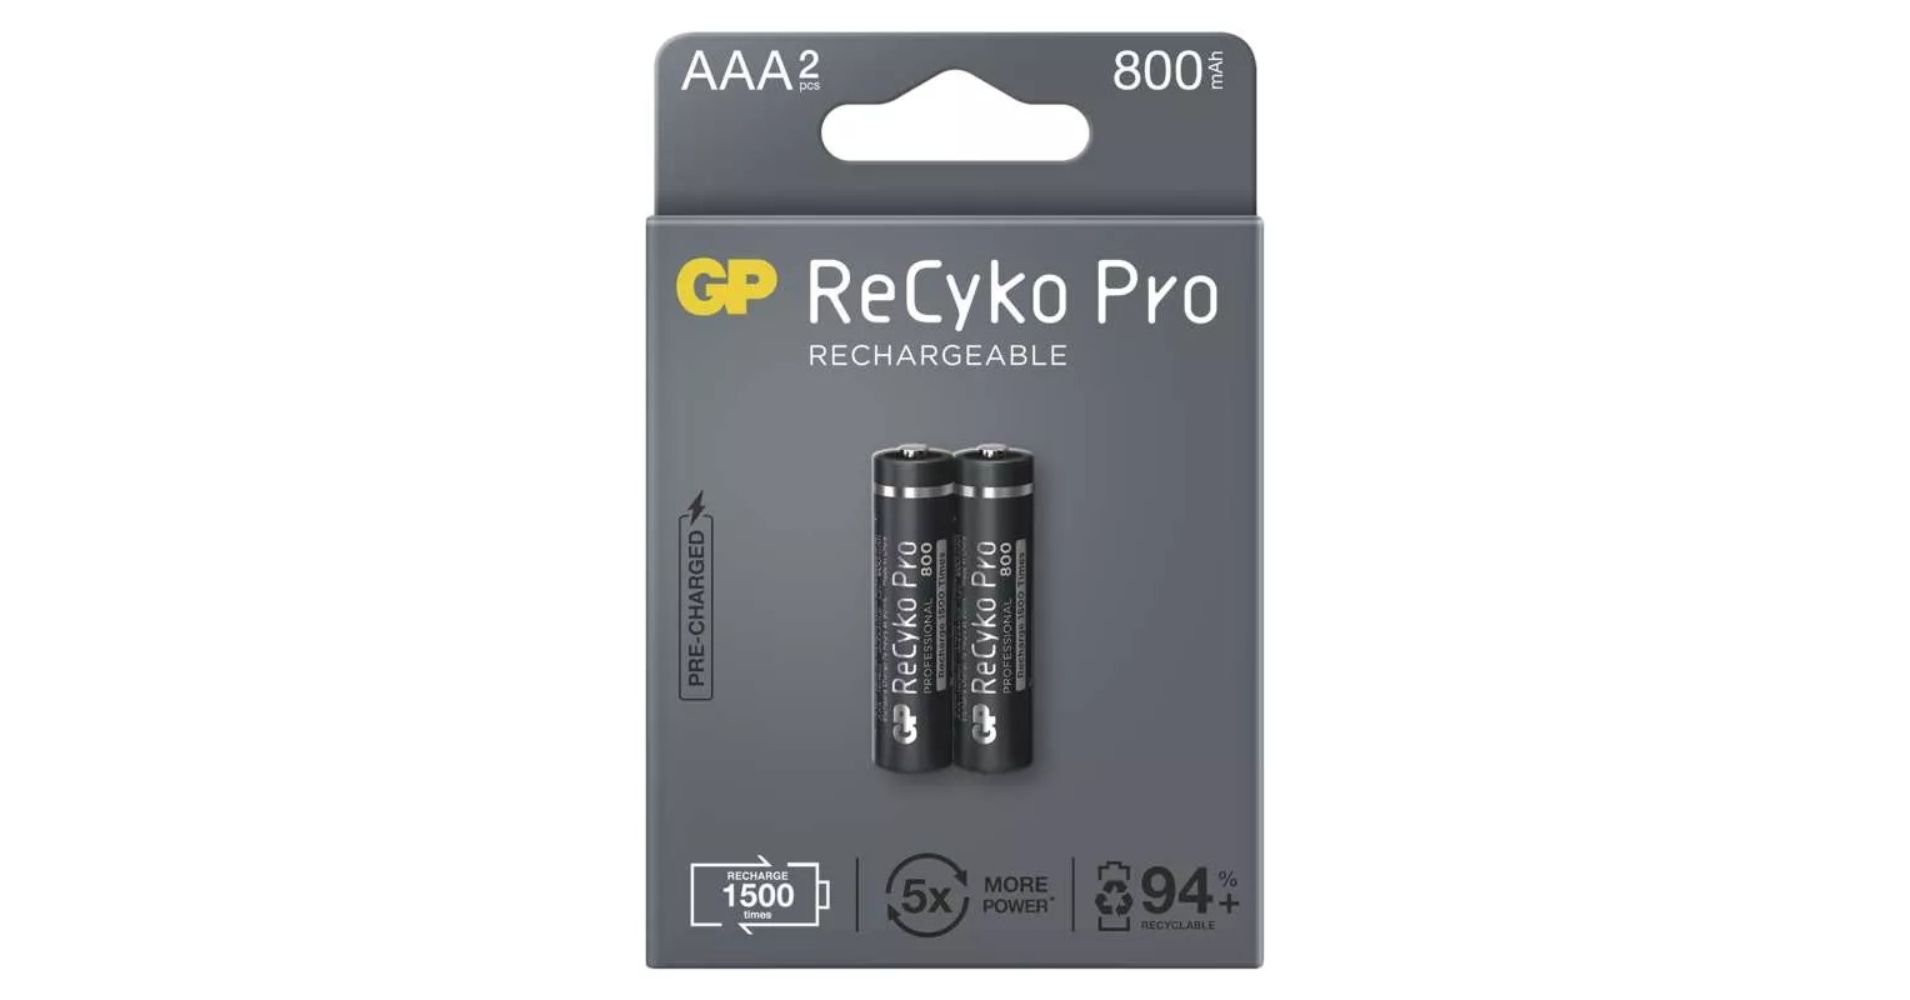 Acumulatori GP Batteries, ReCyko Pro 850mAh AAA (R03) 1.2V NiMH, paper box 2 buc. 